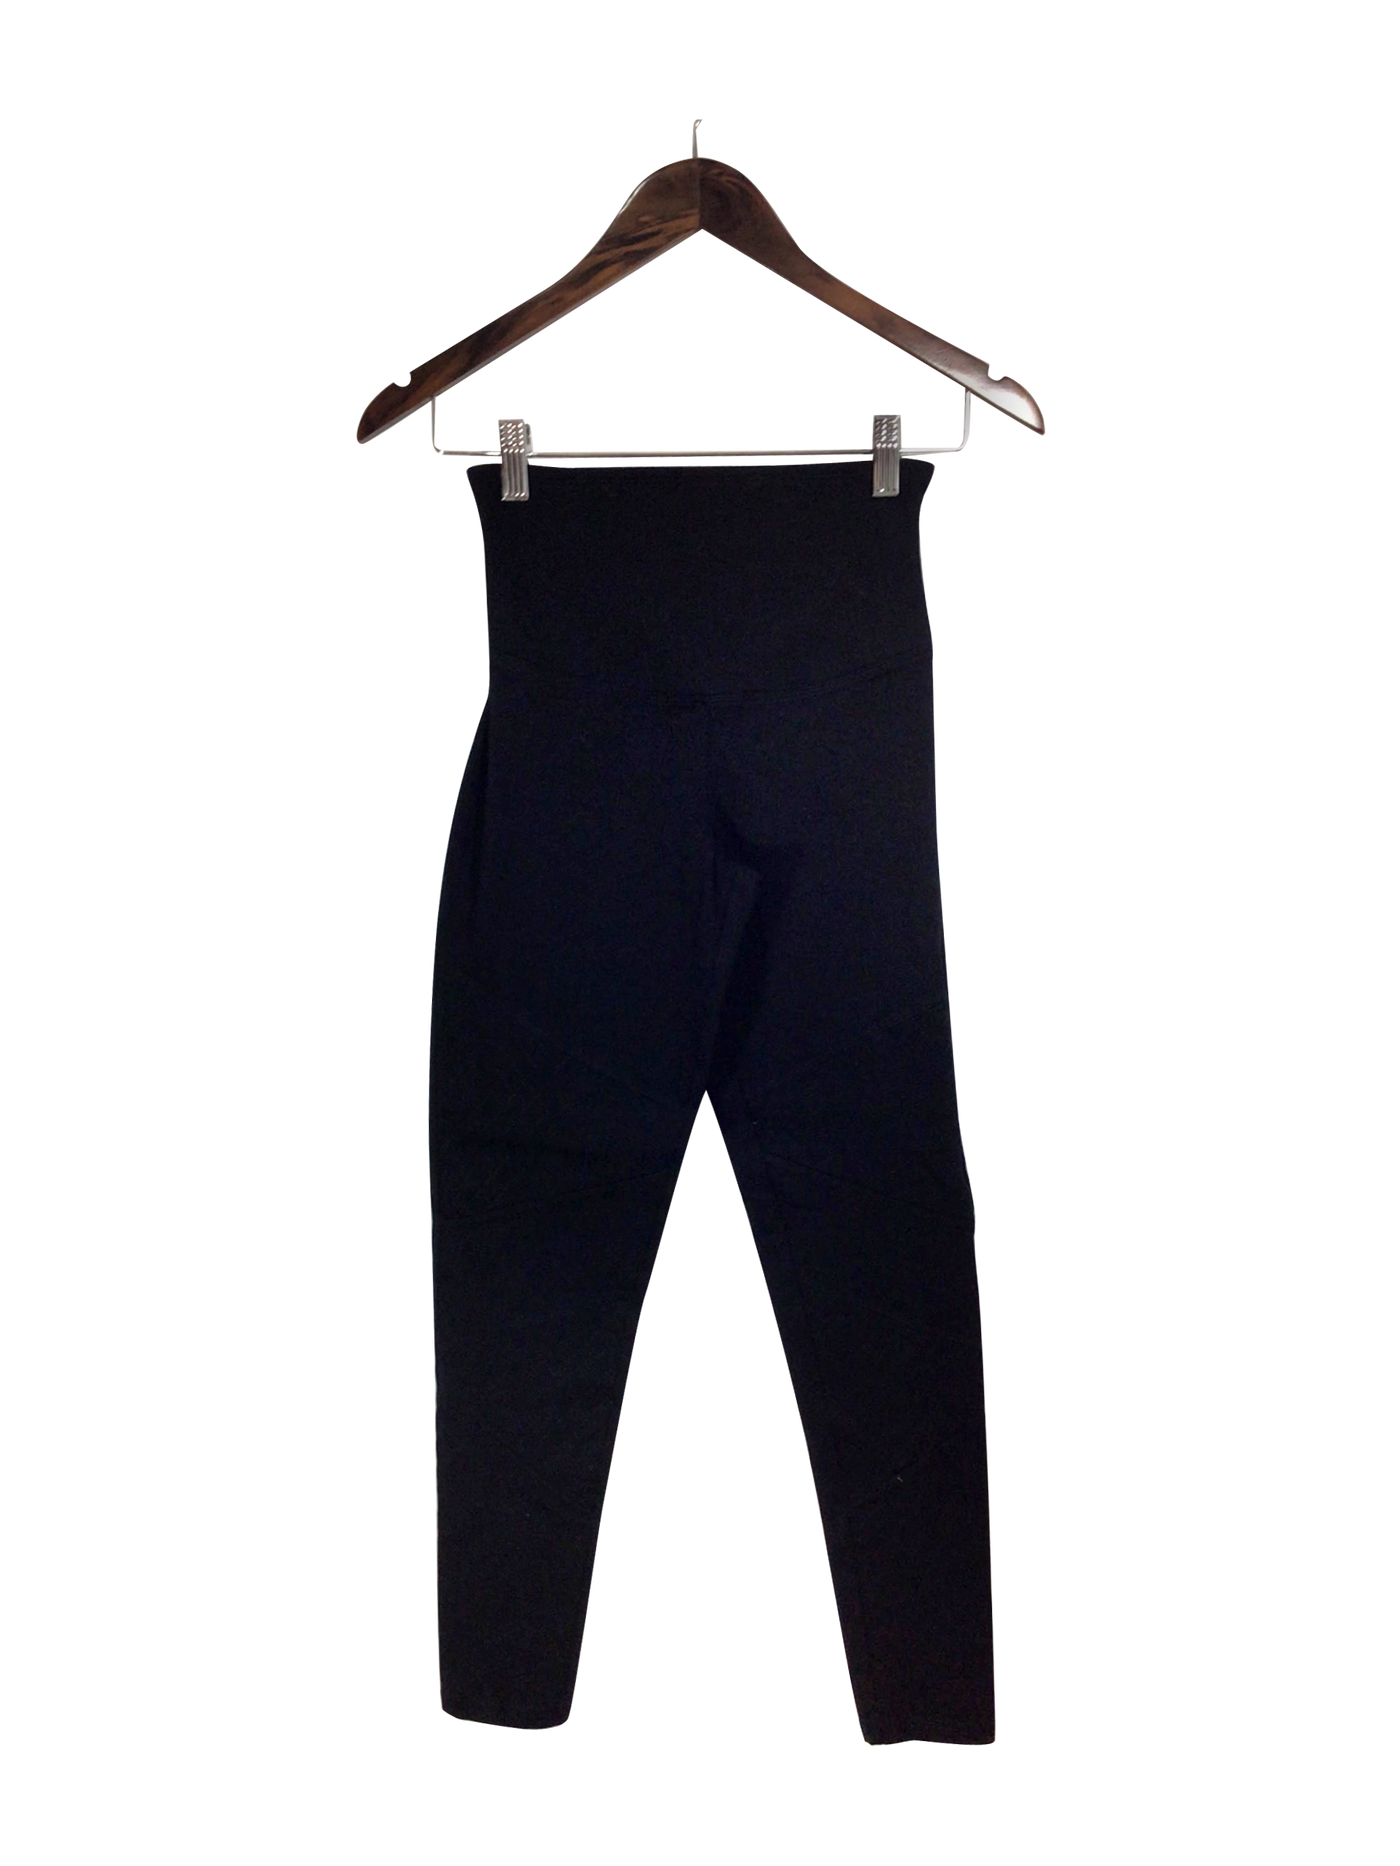 YUMMIE Regular fit Activewear Legging in Black - Size S | 9.74 $ KOOP